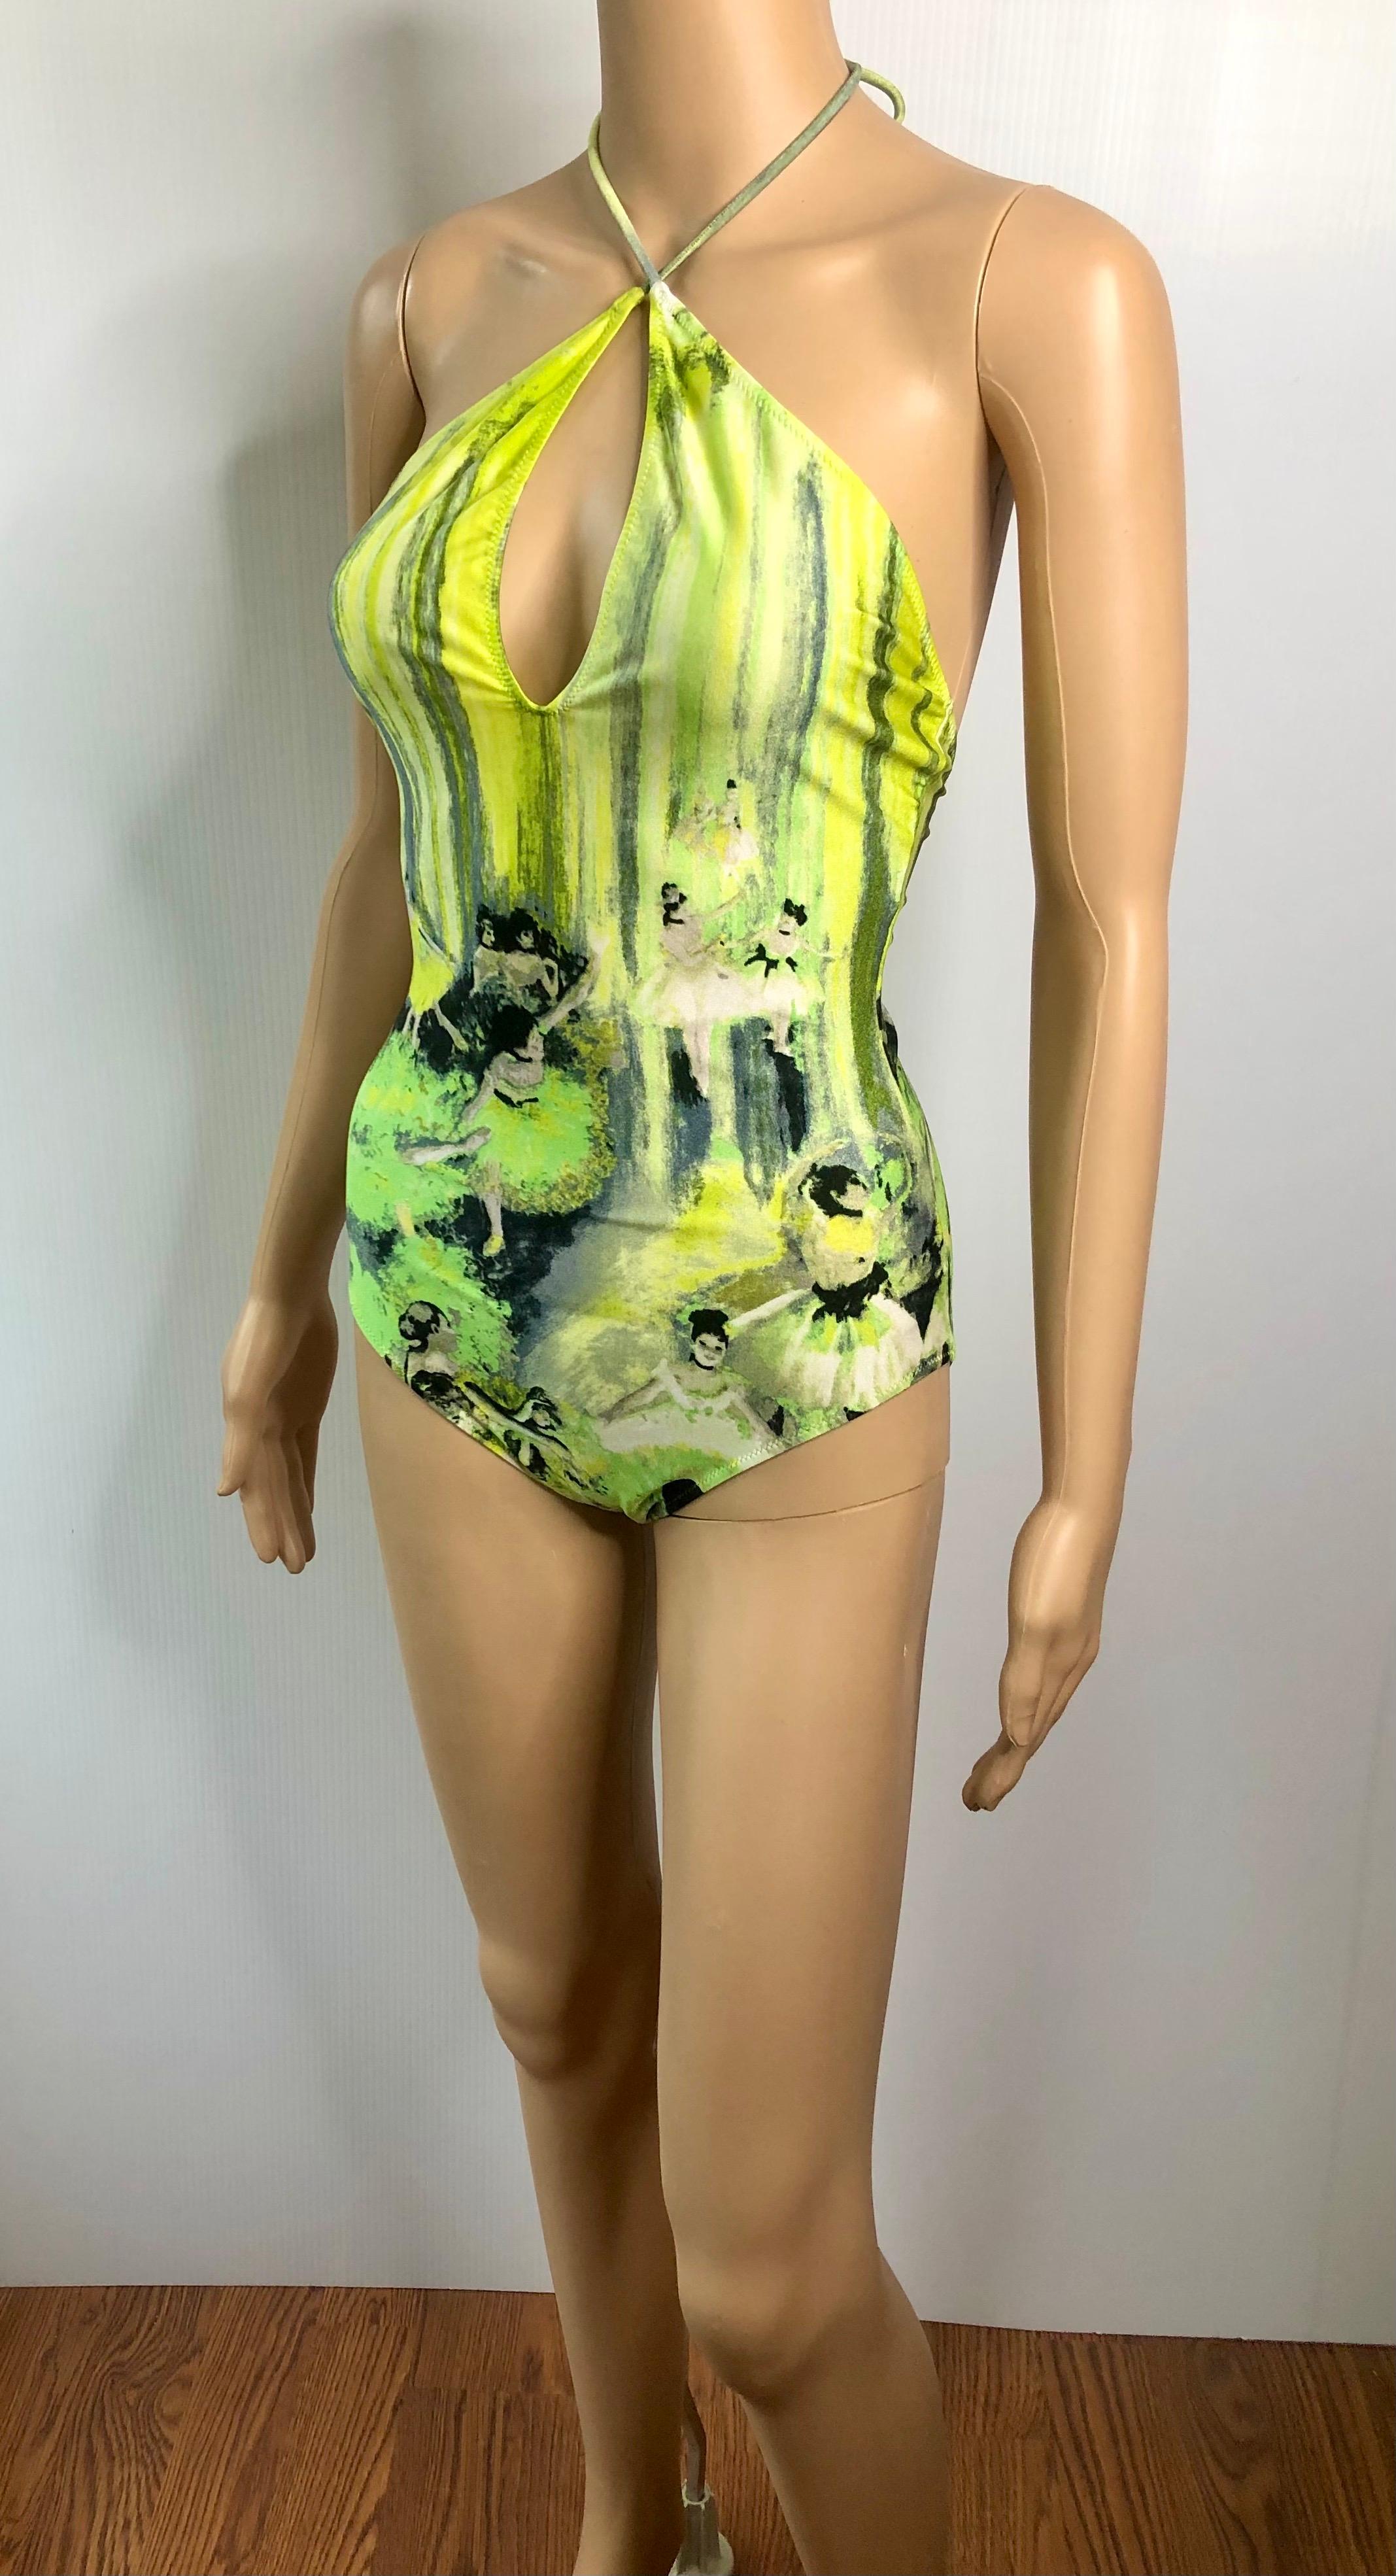 Jean Paul Gaultier Soleil S/S 2004 Degas Ballet Bodysuit Swimwear Swimsuit In Excellent Condition For Sale In Naples, FL